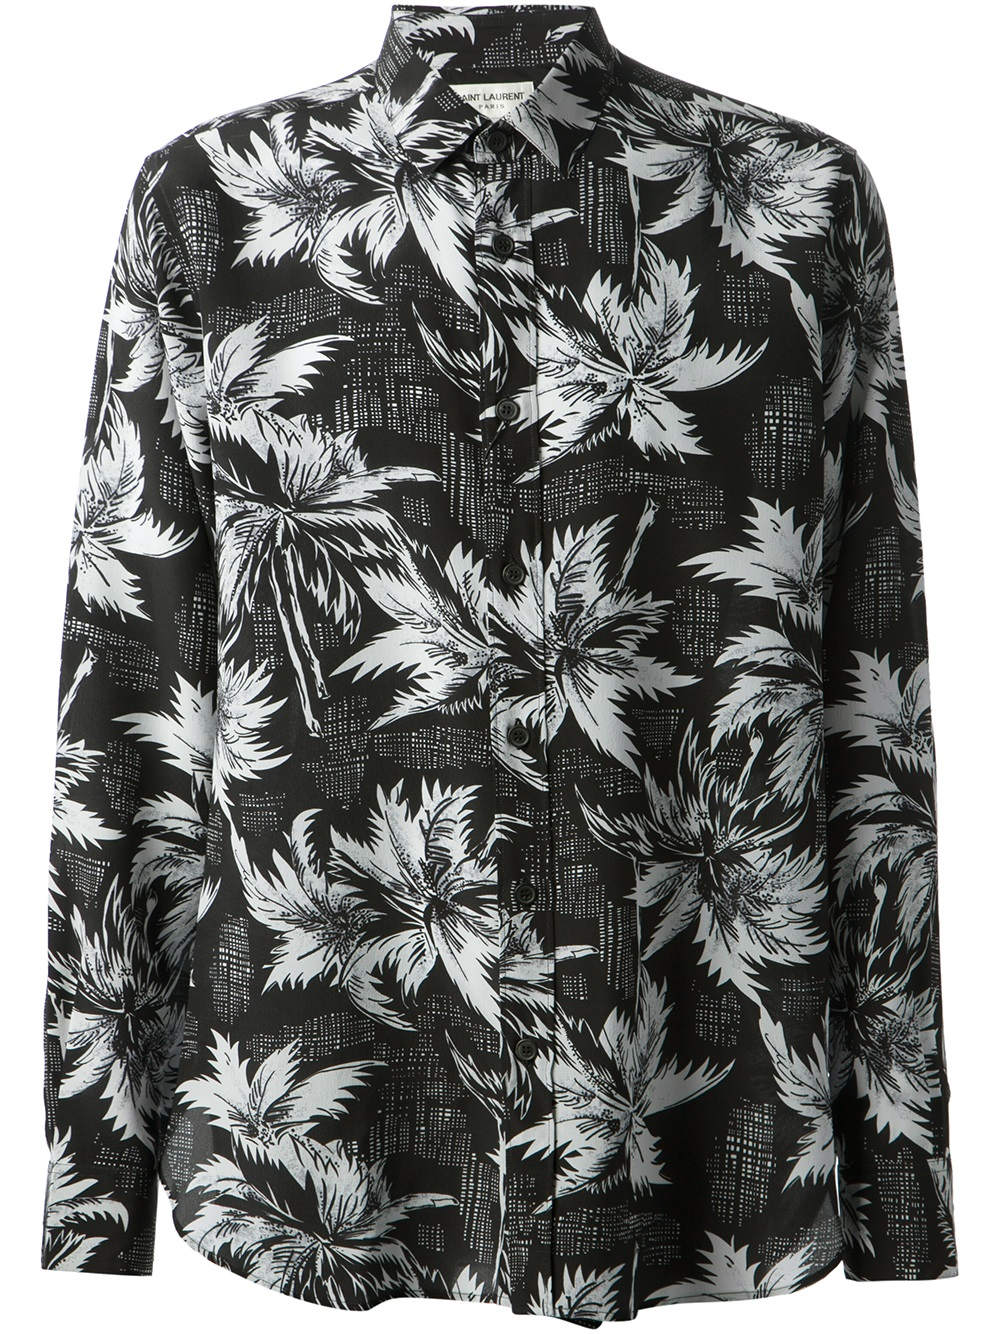 Lyst - Saint Laurent Floral Print Shirt in Black for Men